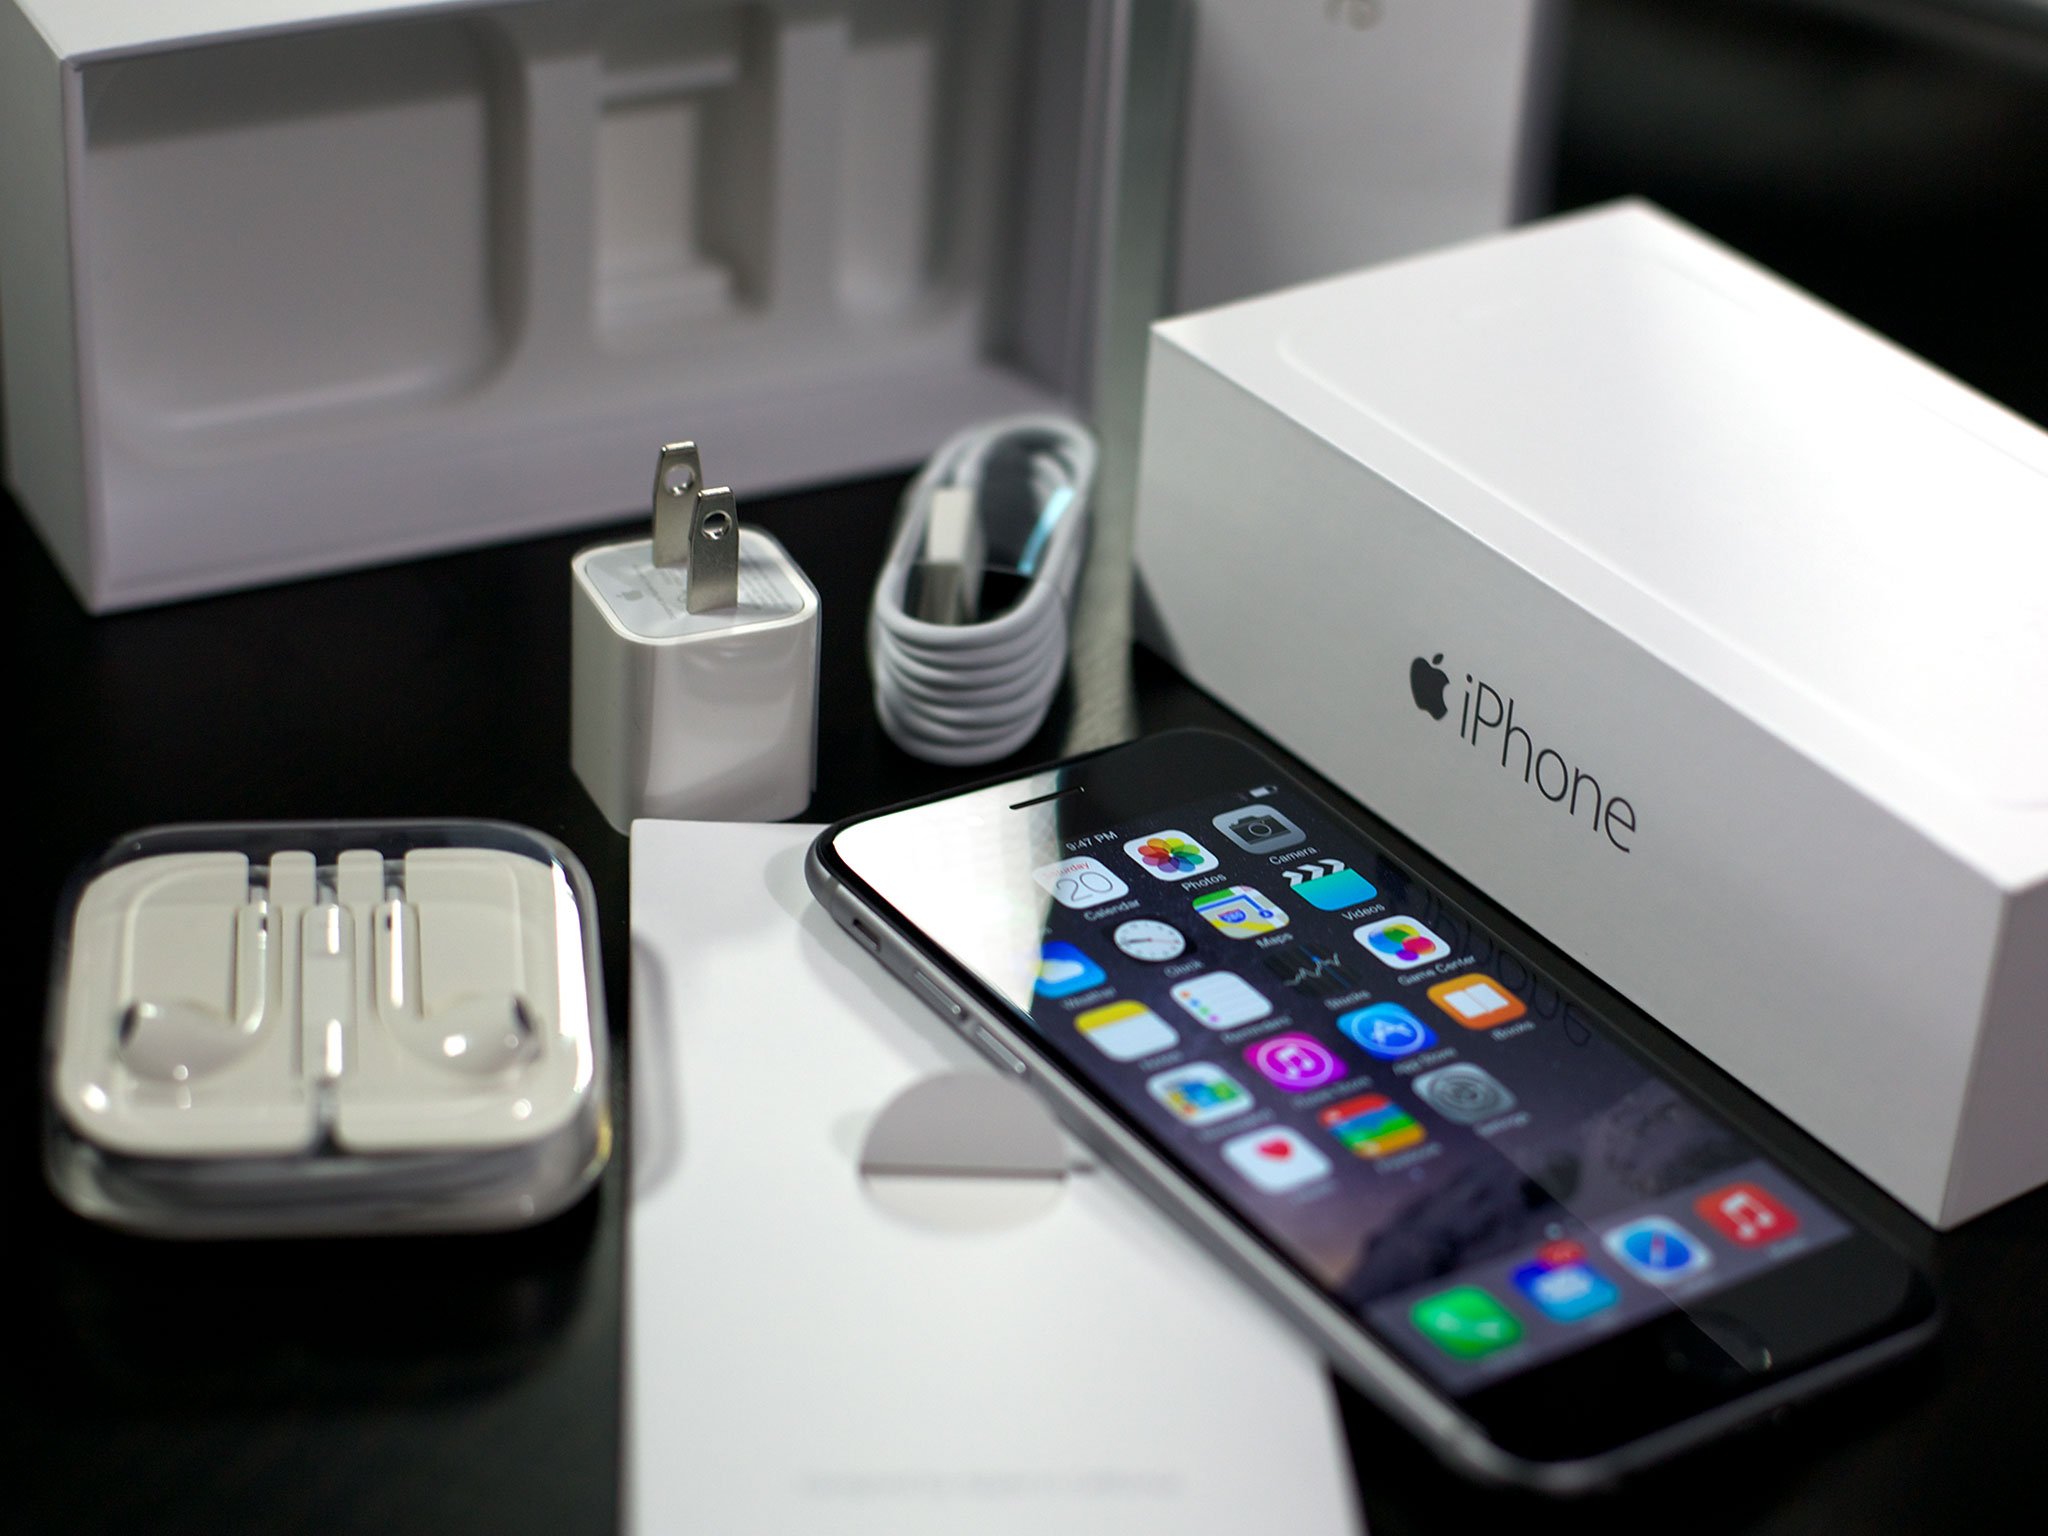 Apple releases iOS 8.0.2, addresses previous update errors